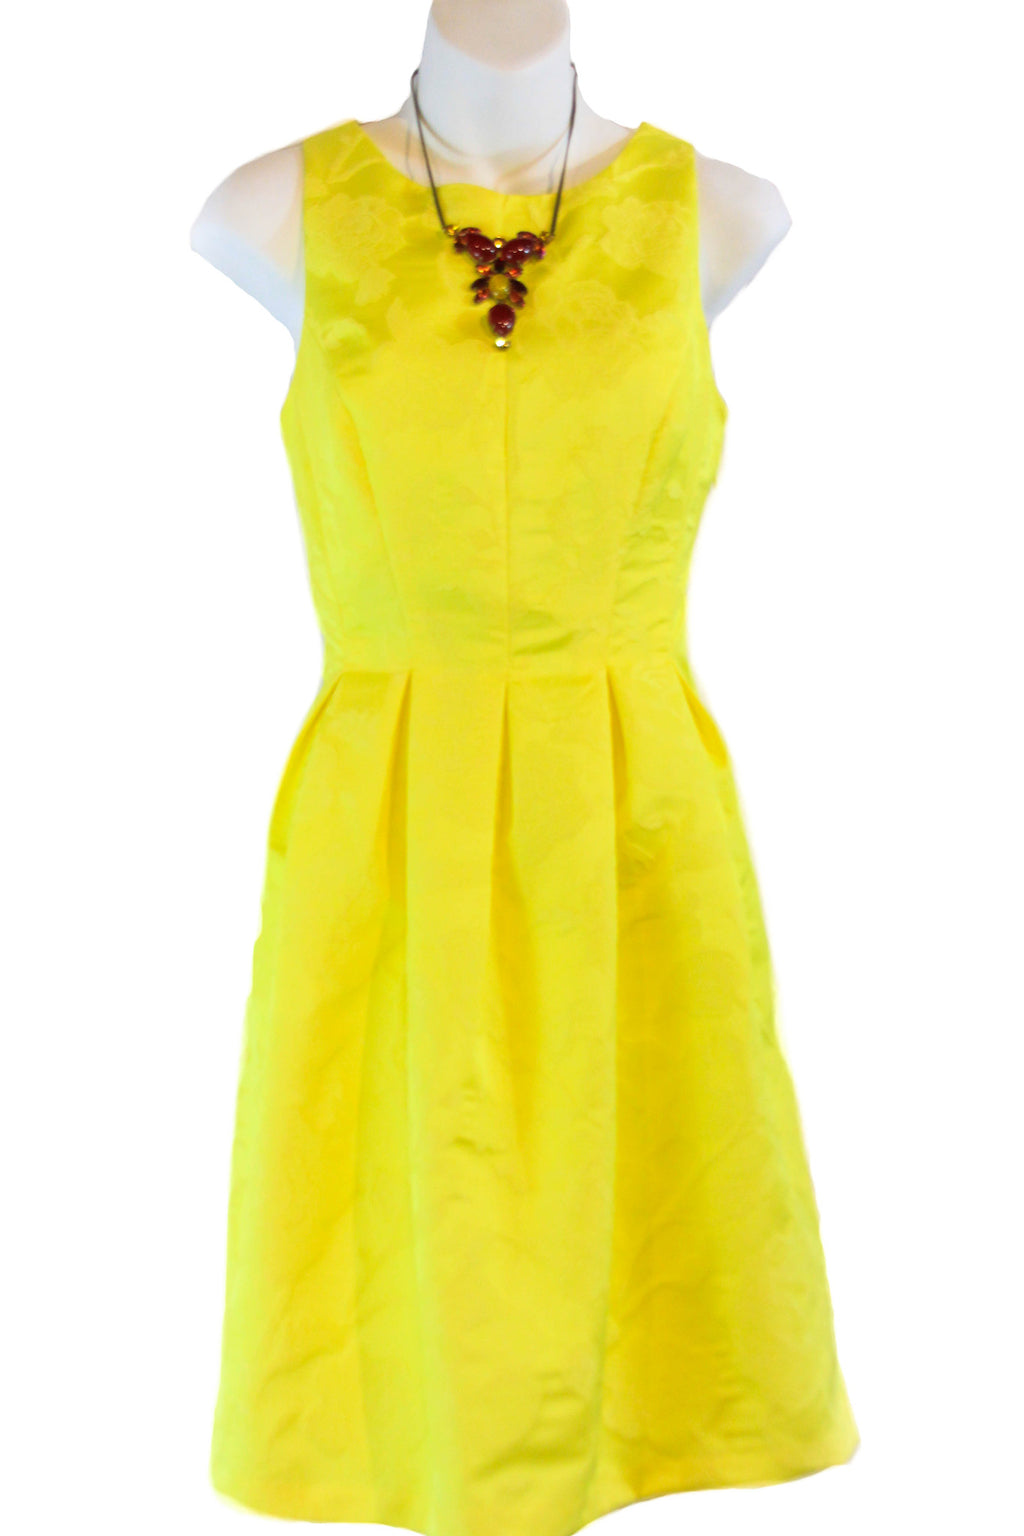 Starburst Yellow Pleated Dress